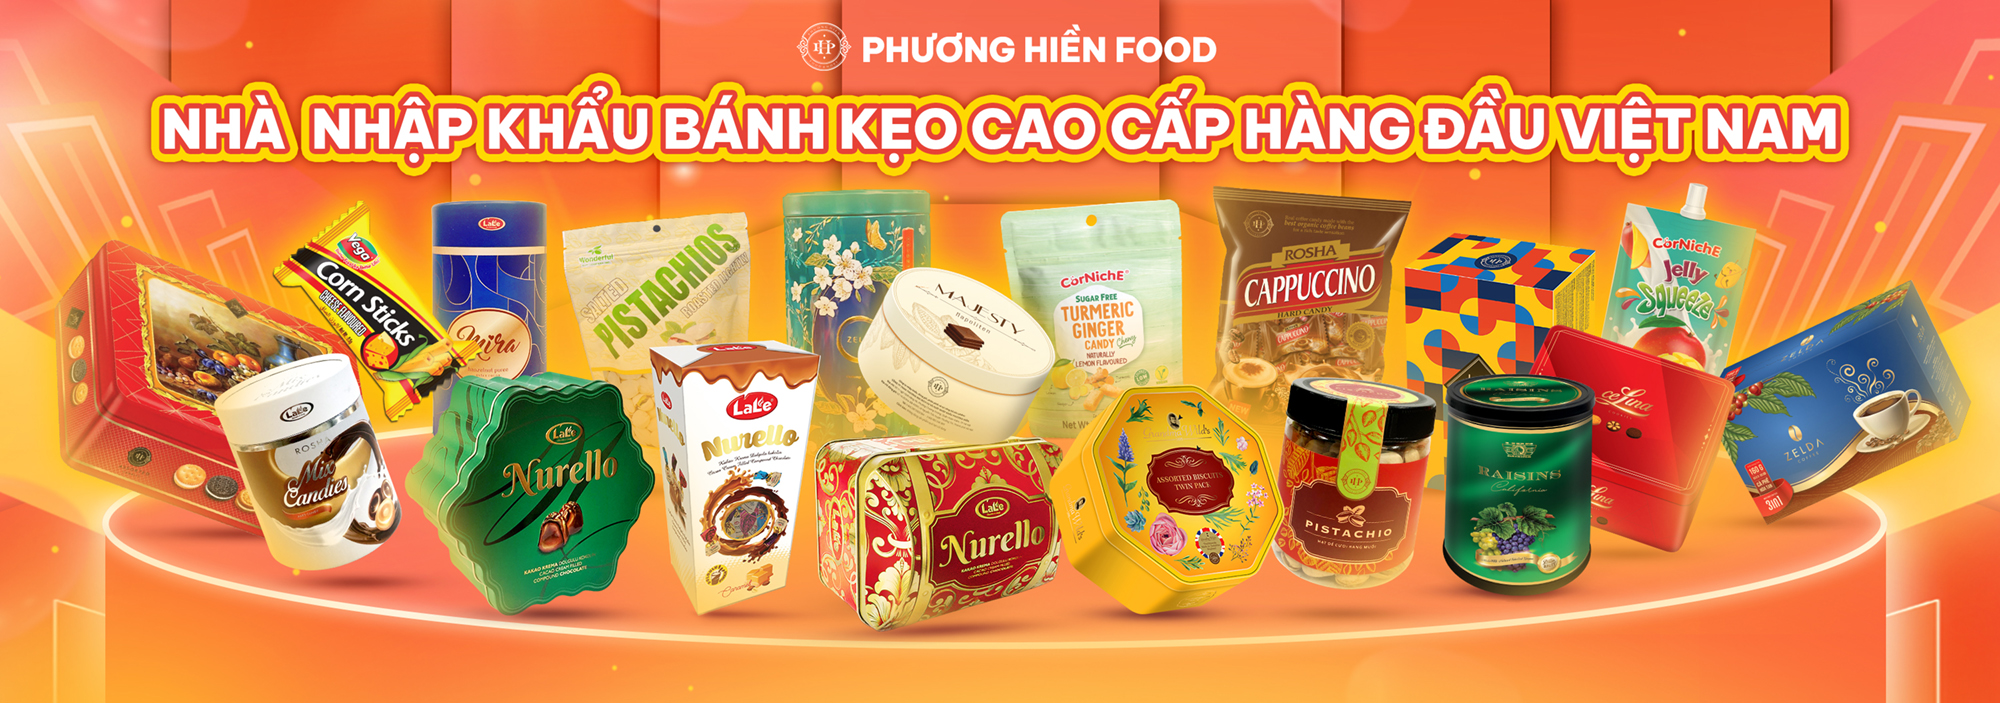 Phuong-Hien-Food-banner-web